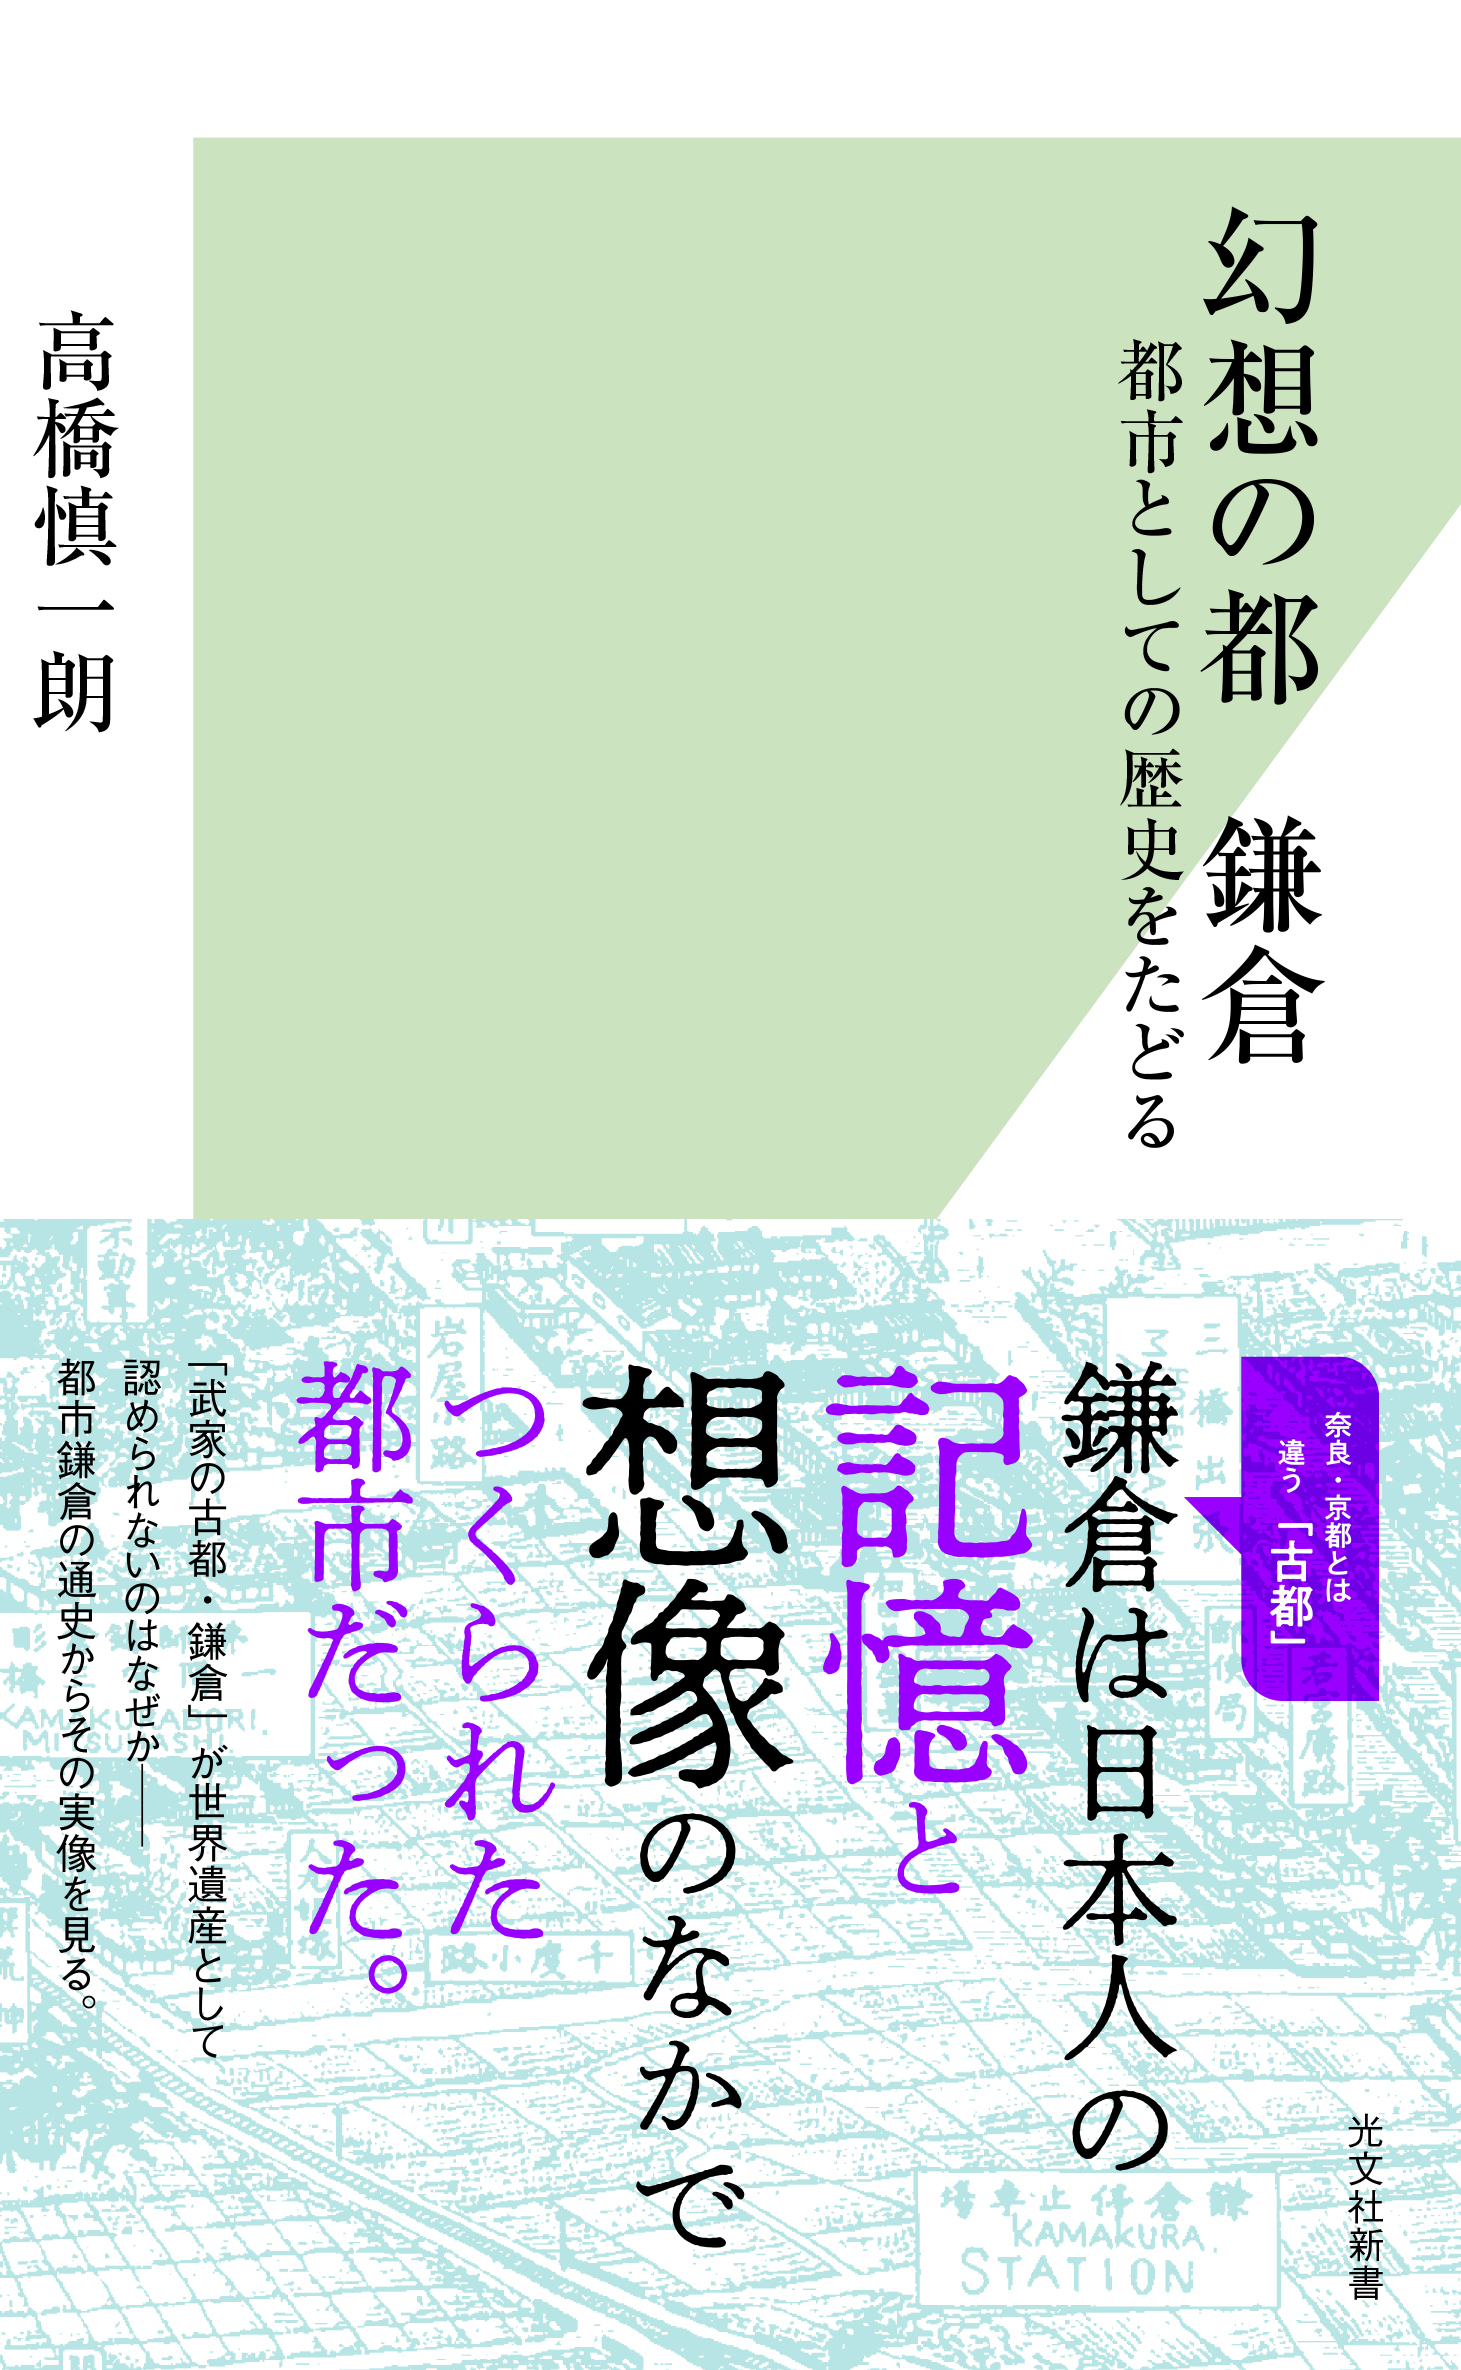 UTokyo BiblioPlaza - Azuma kagami